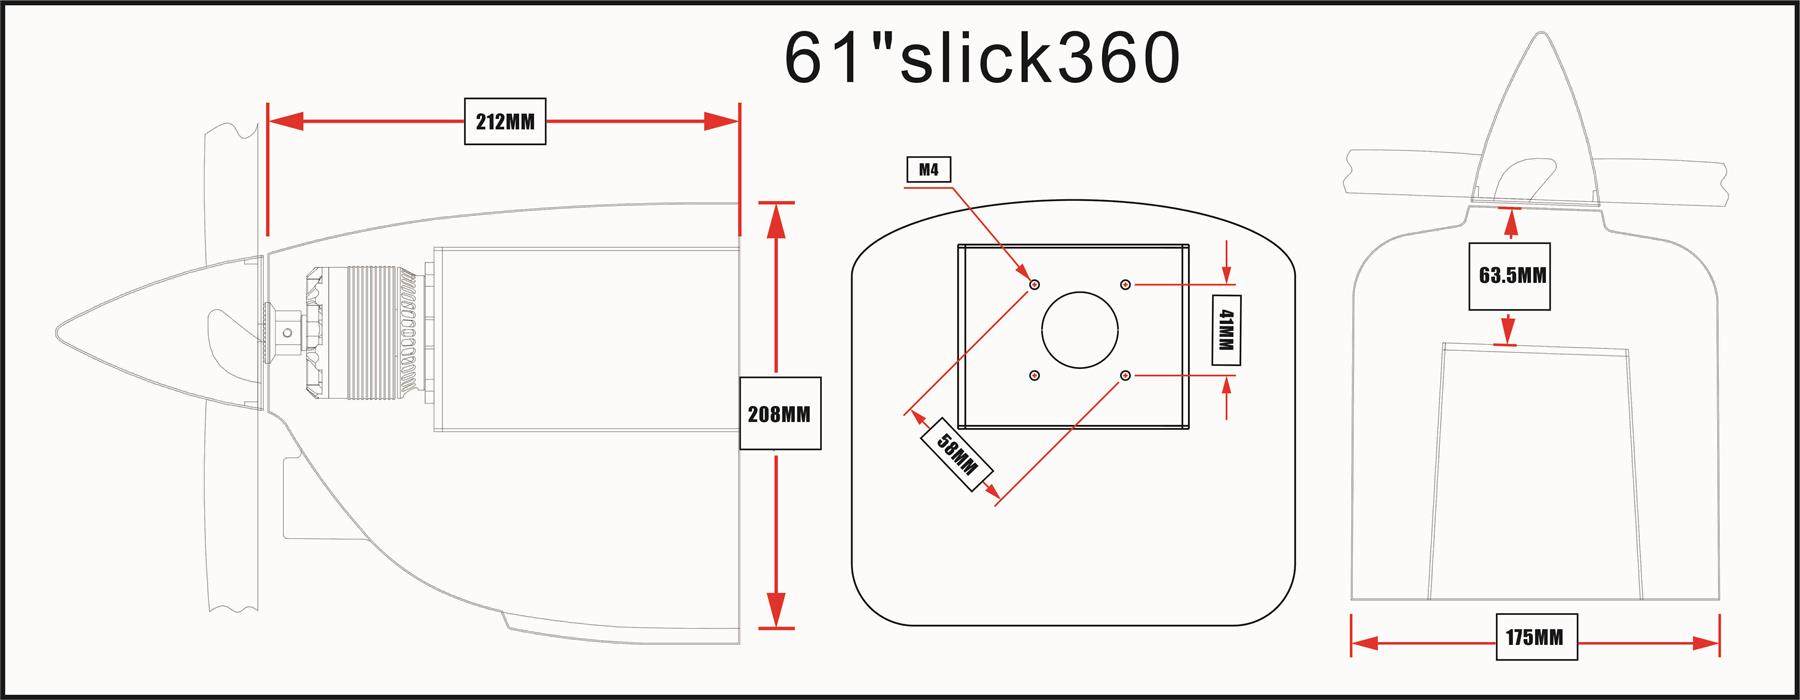 SLICK 360 - 61 V2 - weiß/grün/blau